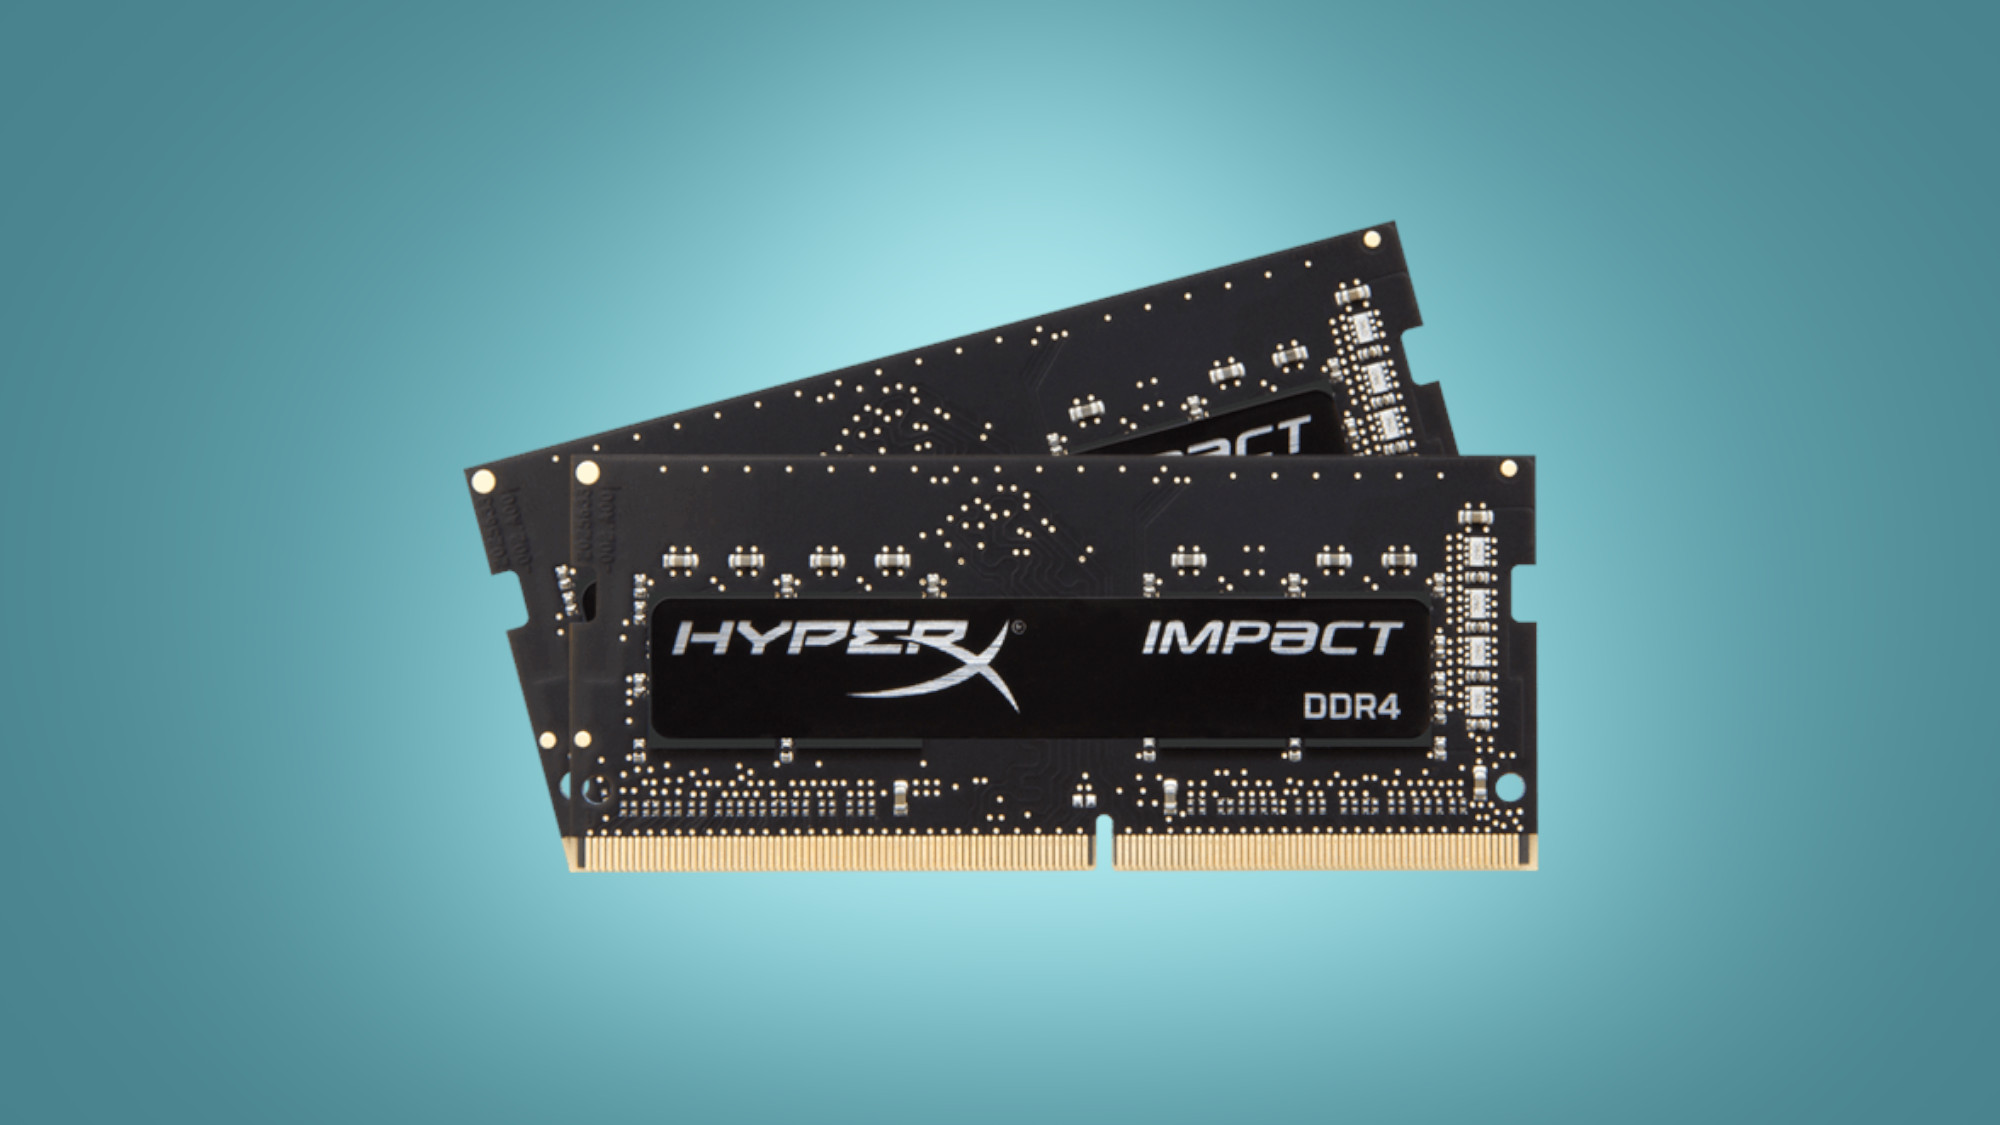 HyperX Impact DDR4 RAM memory on light blue background